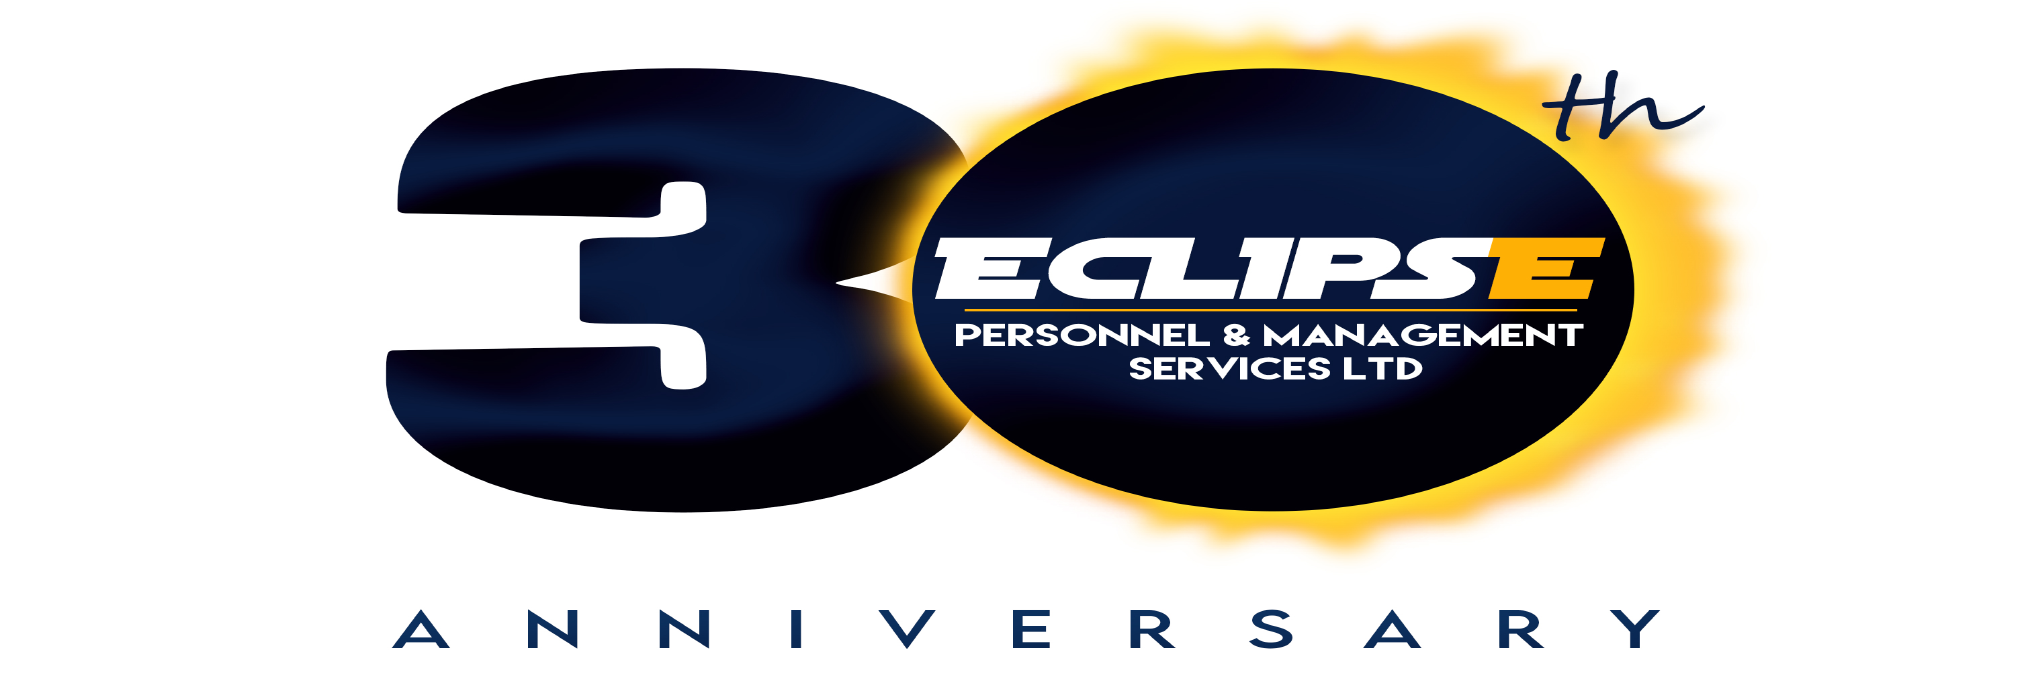 Eclipse Personnel & Management Services Limited